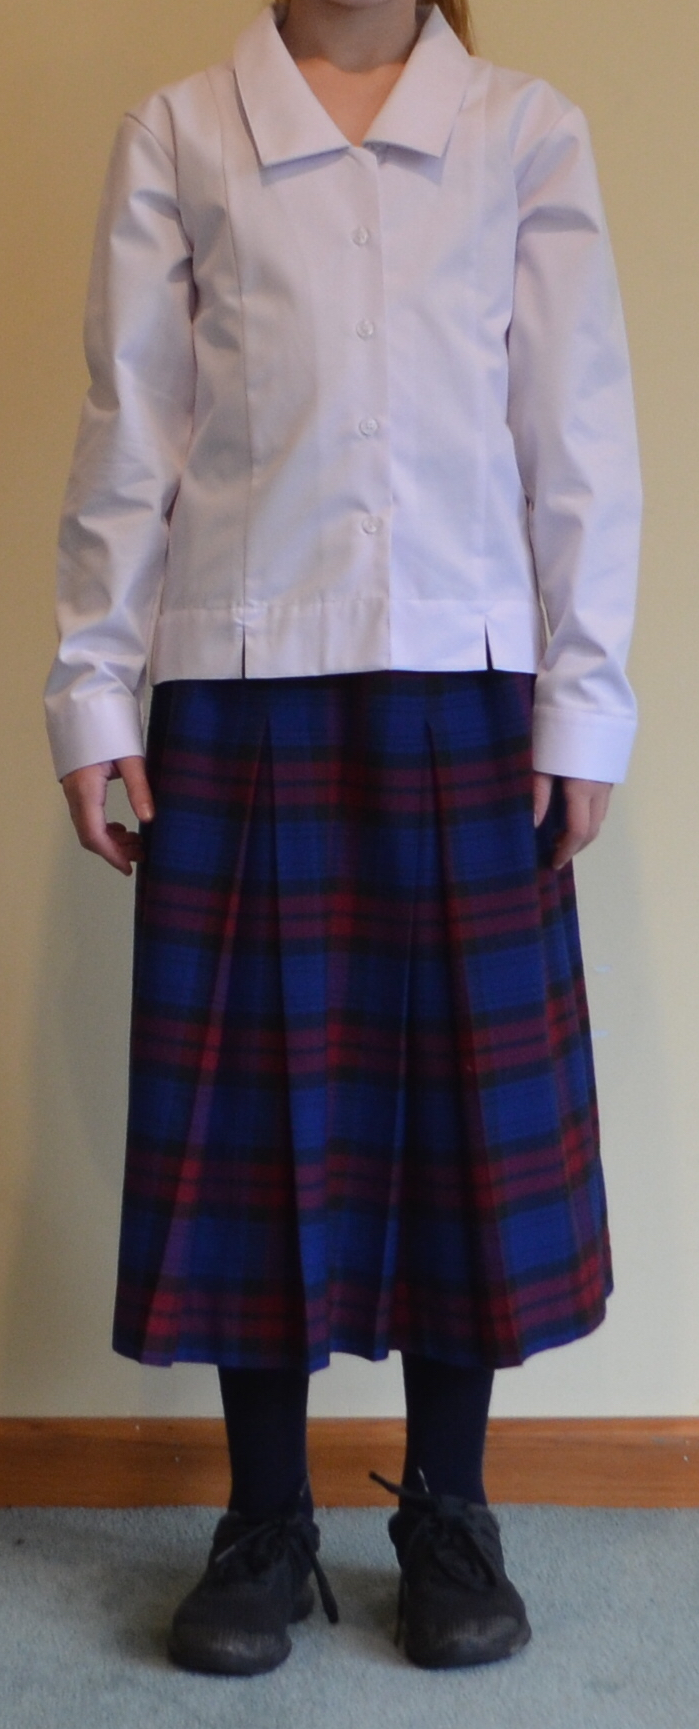 Winter skirt with white long-sleeve shirt